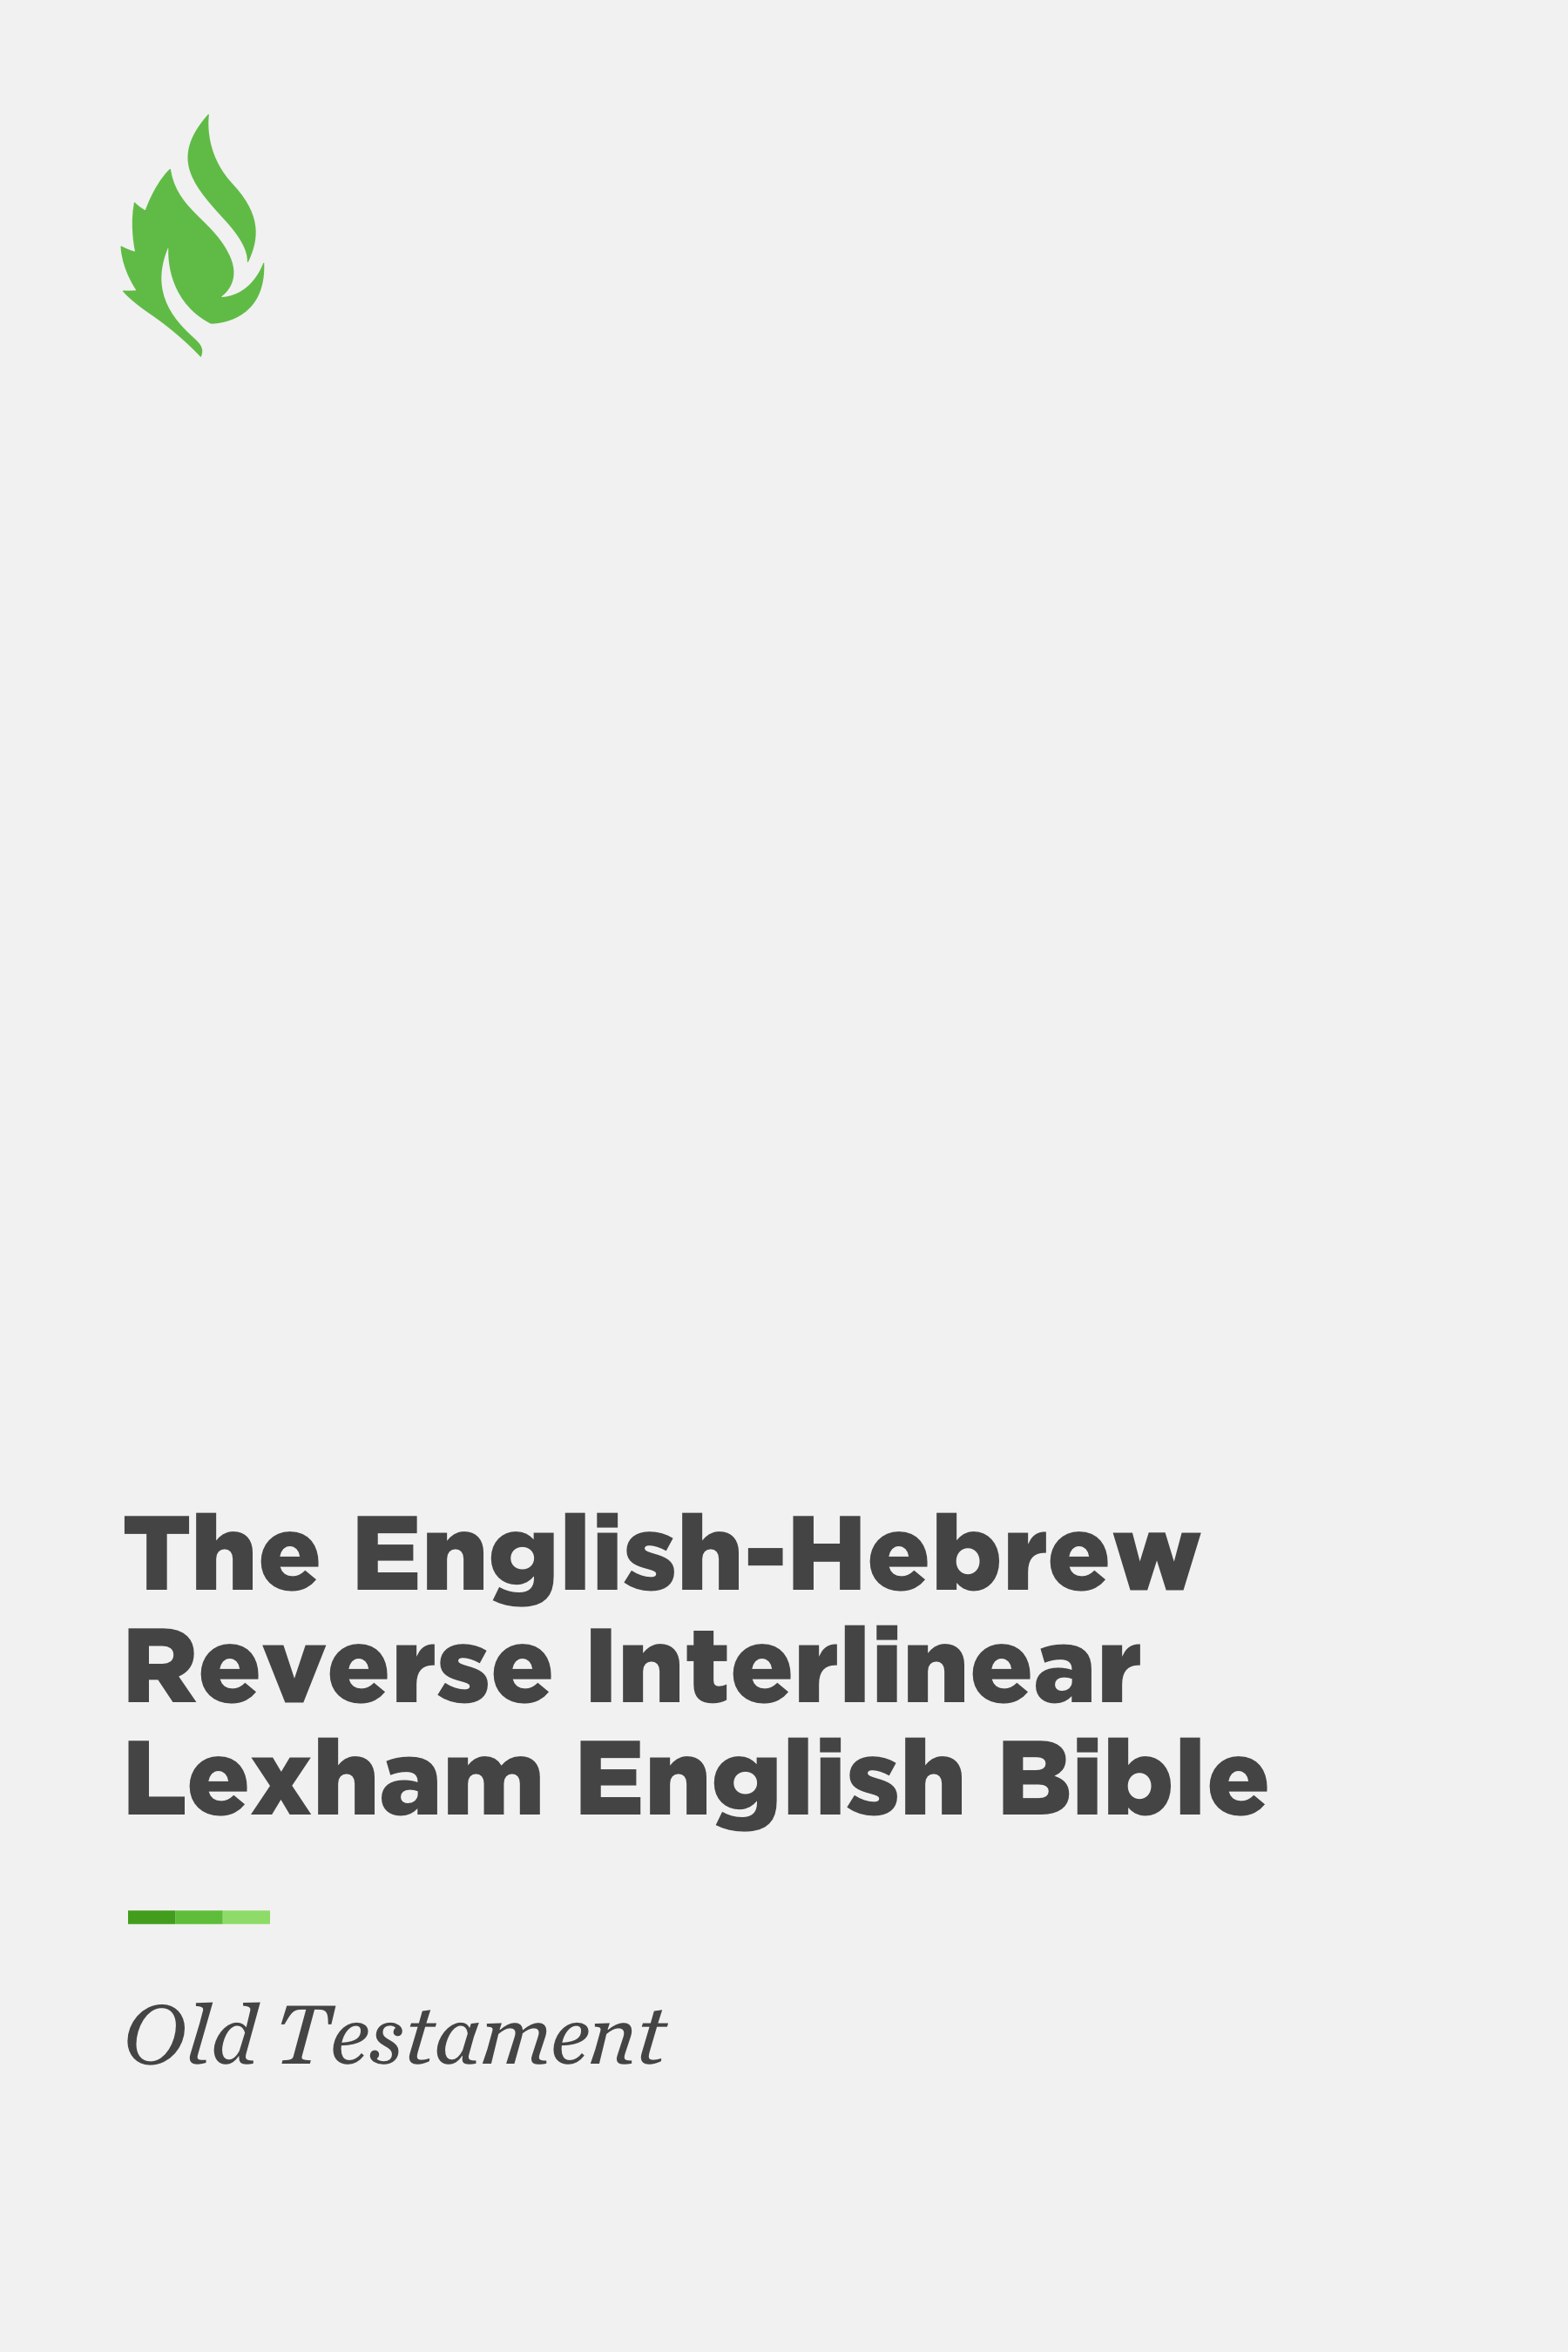 The English-Hebrew Reverse Interlinear Old Testament Lexham English Bible